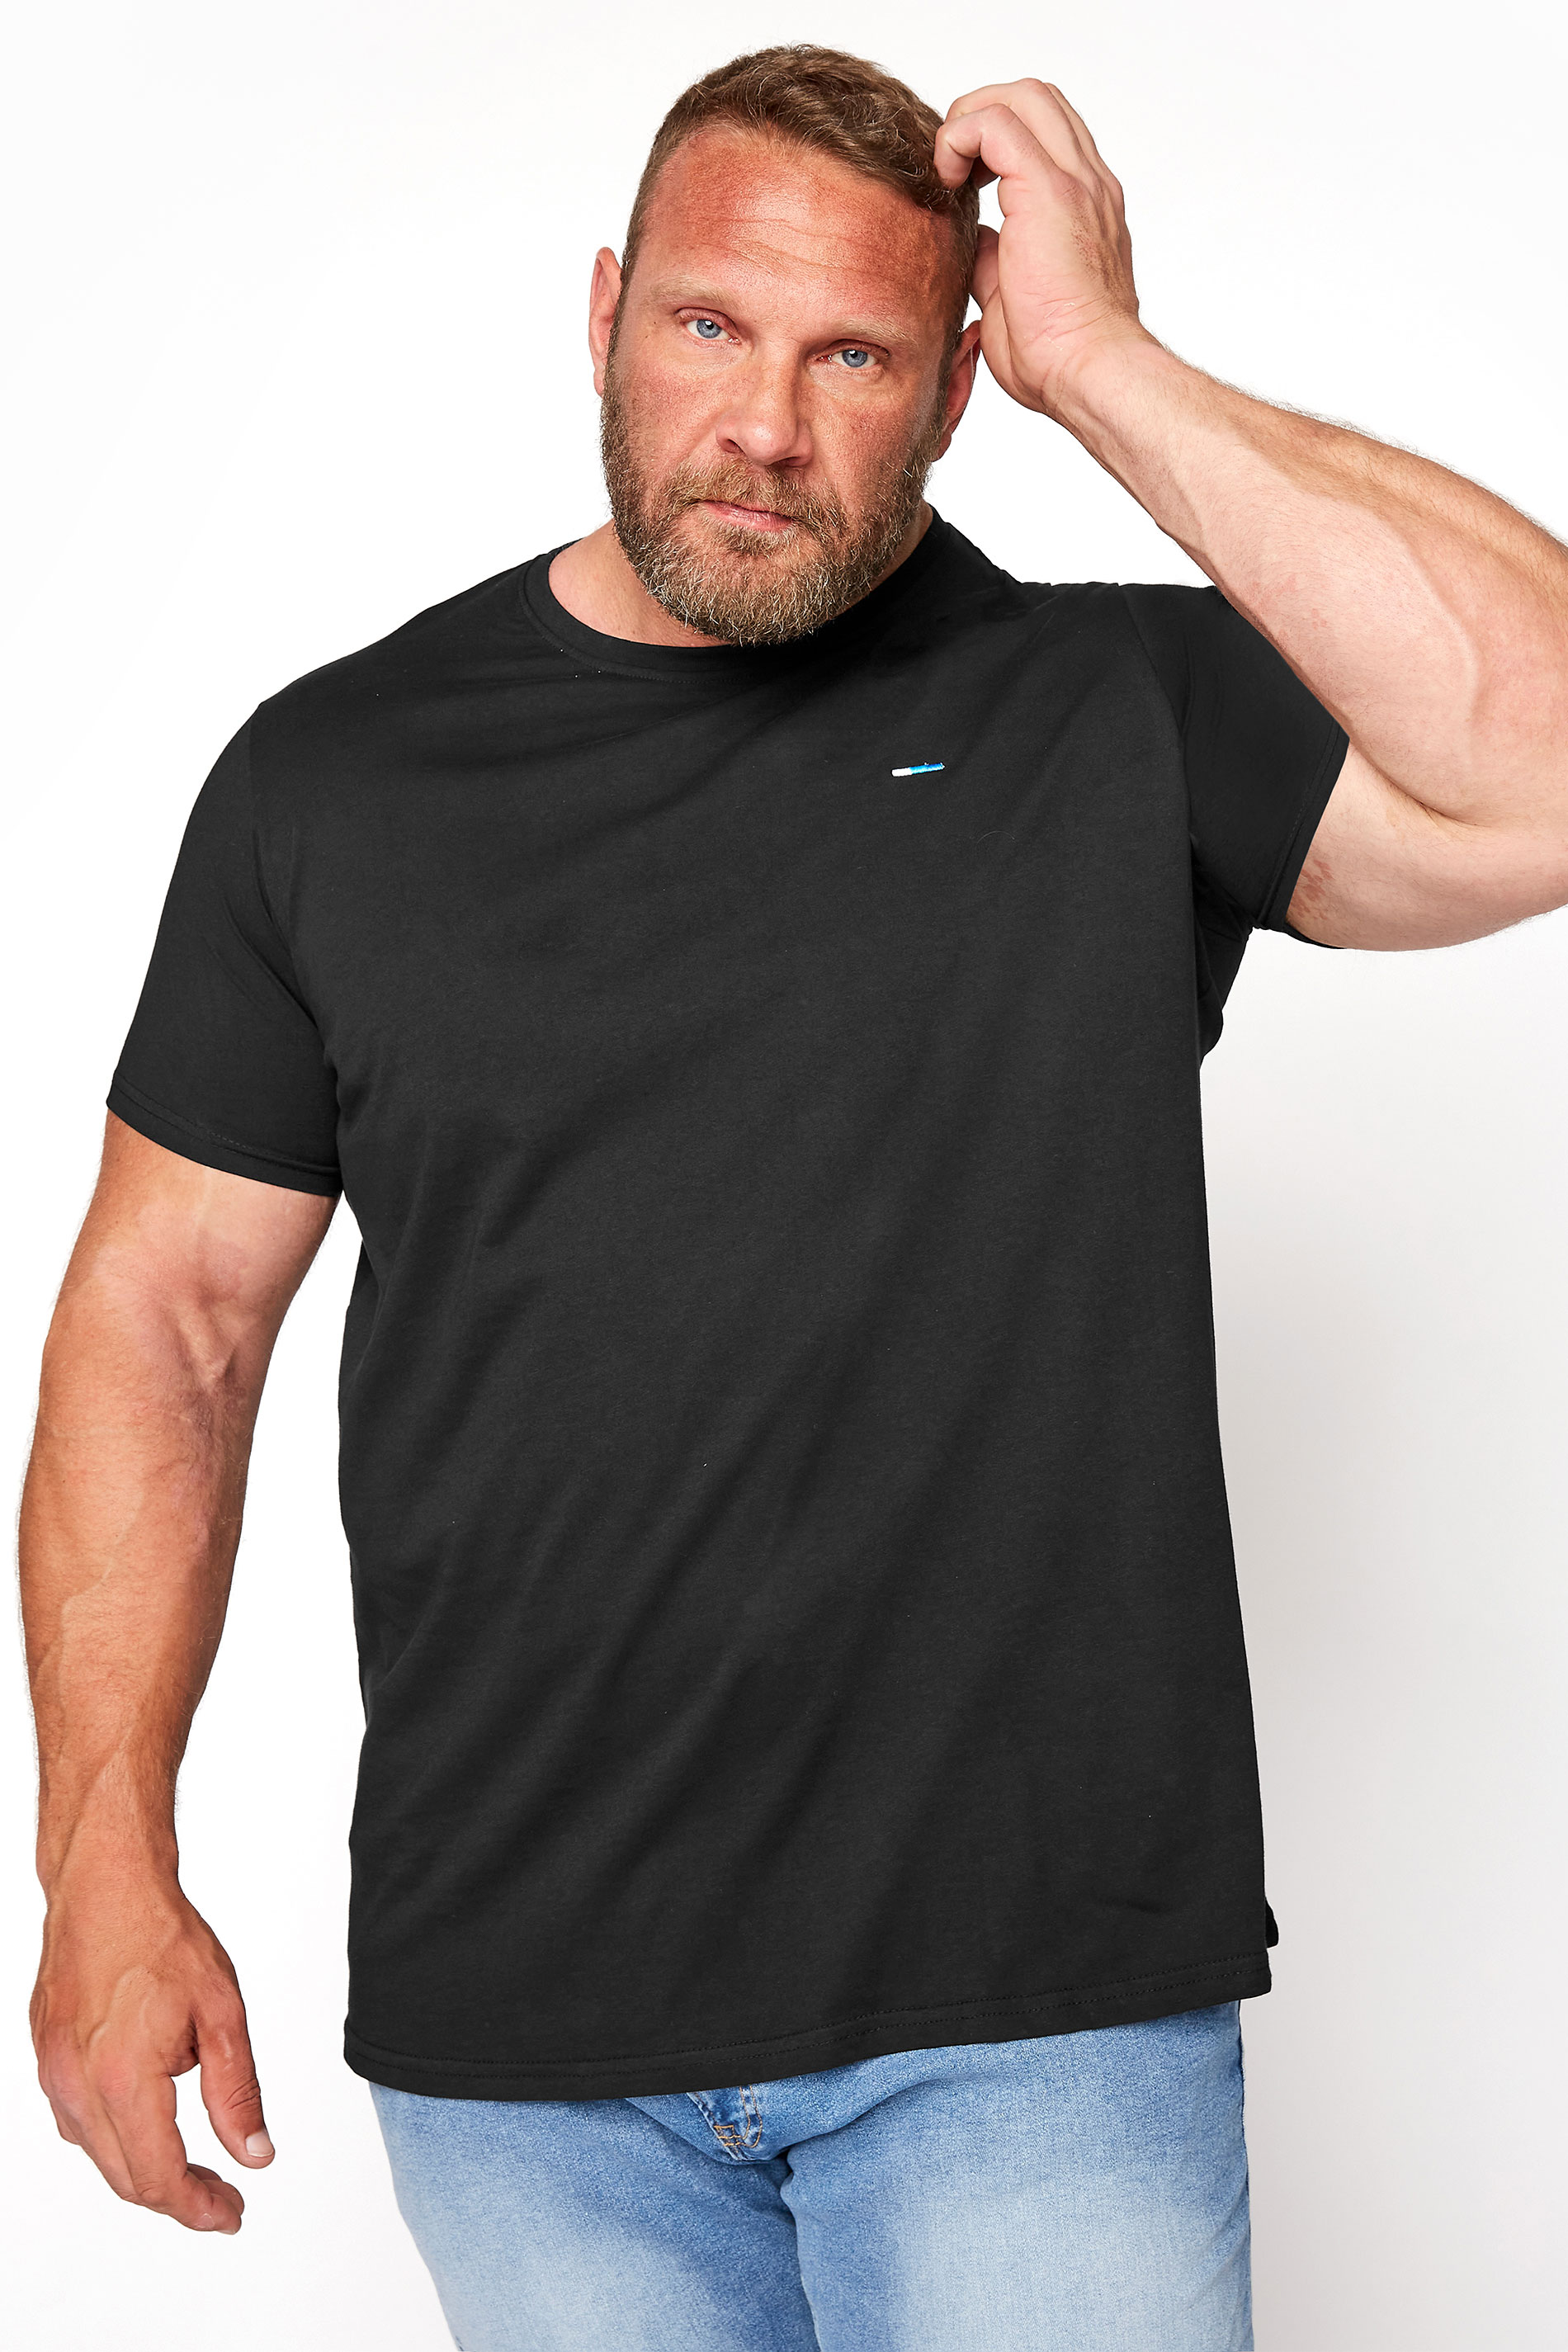 BadRhino For Less Black T-Shirt 1